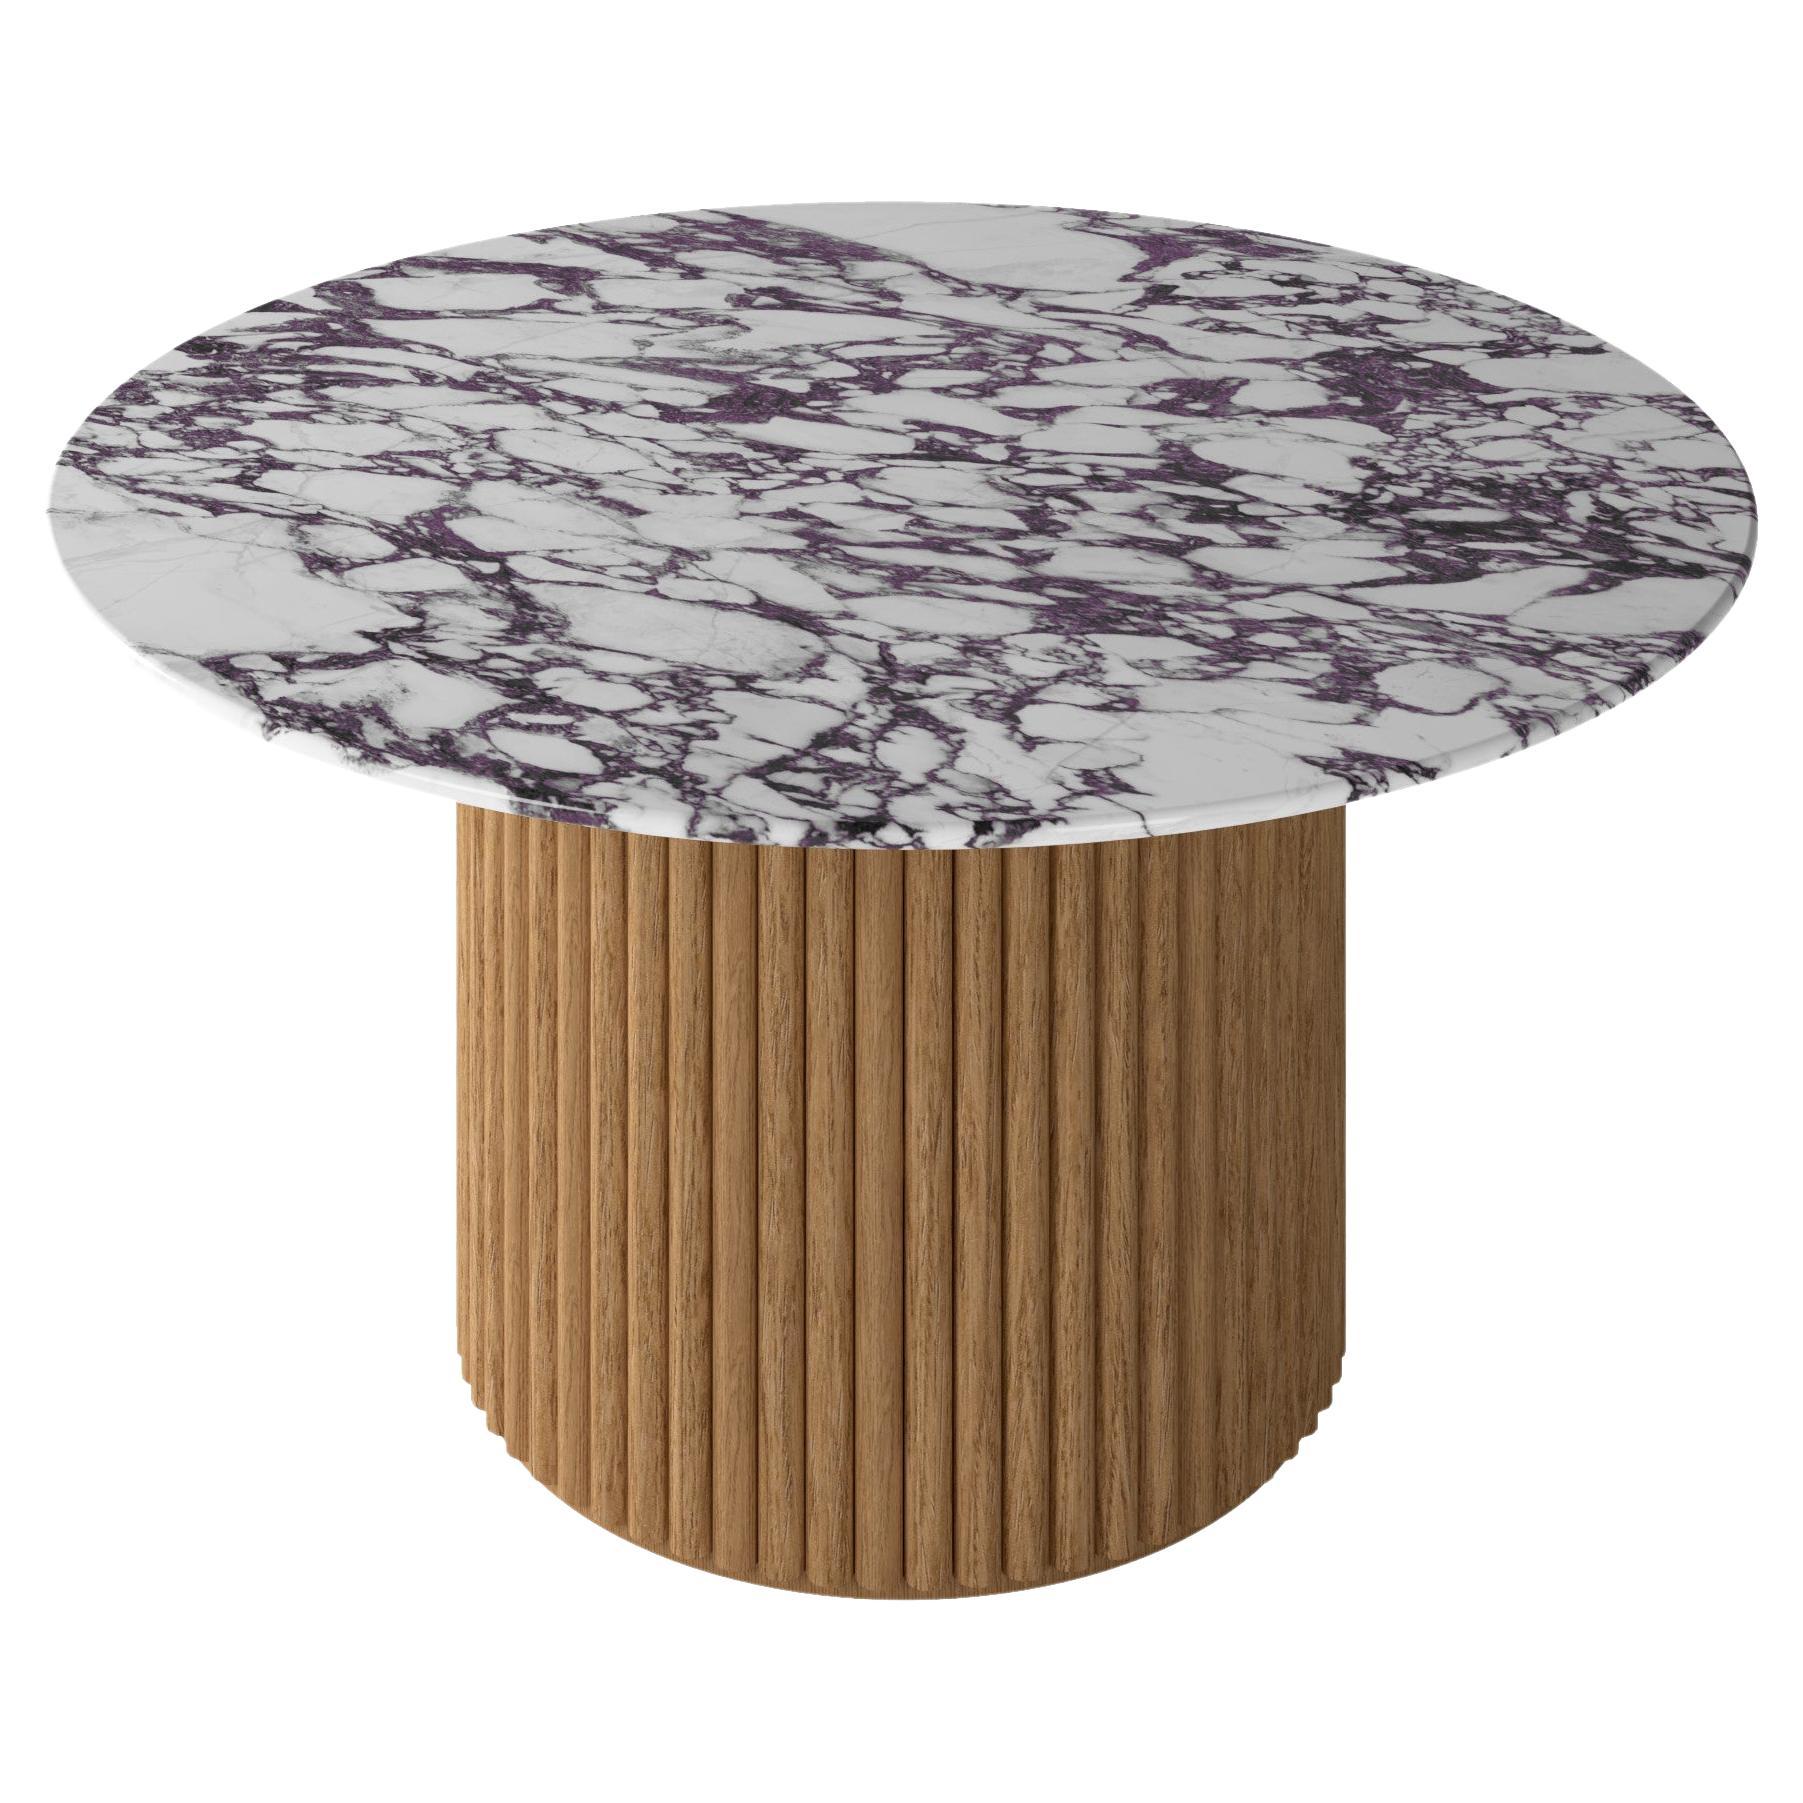 NORDST Mette Dining Table, Italian Calacatta viola Marble, Danish Modern Design